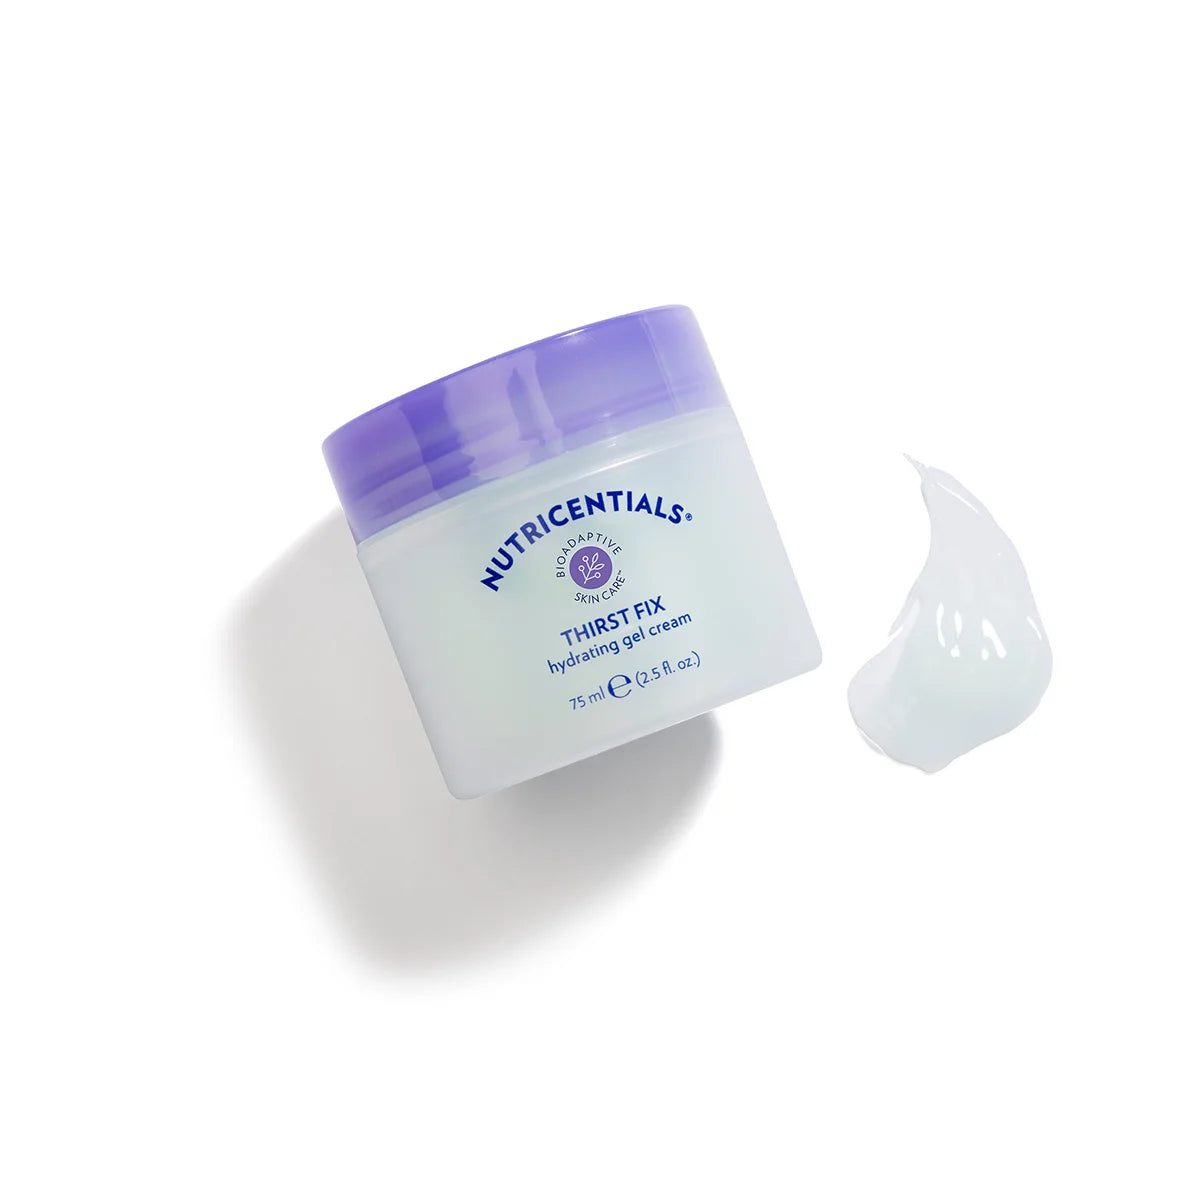 Nutricentials® Bioadaptive Skin Care™ Thirst Fix Hydrating Gel Cream - nustylemom